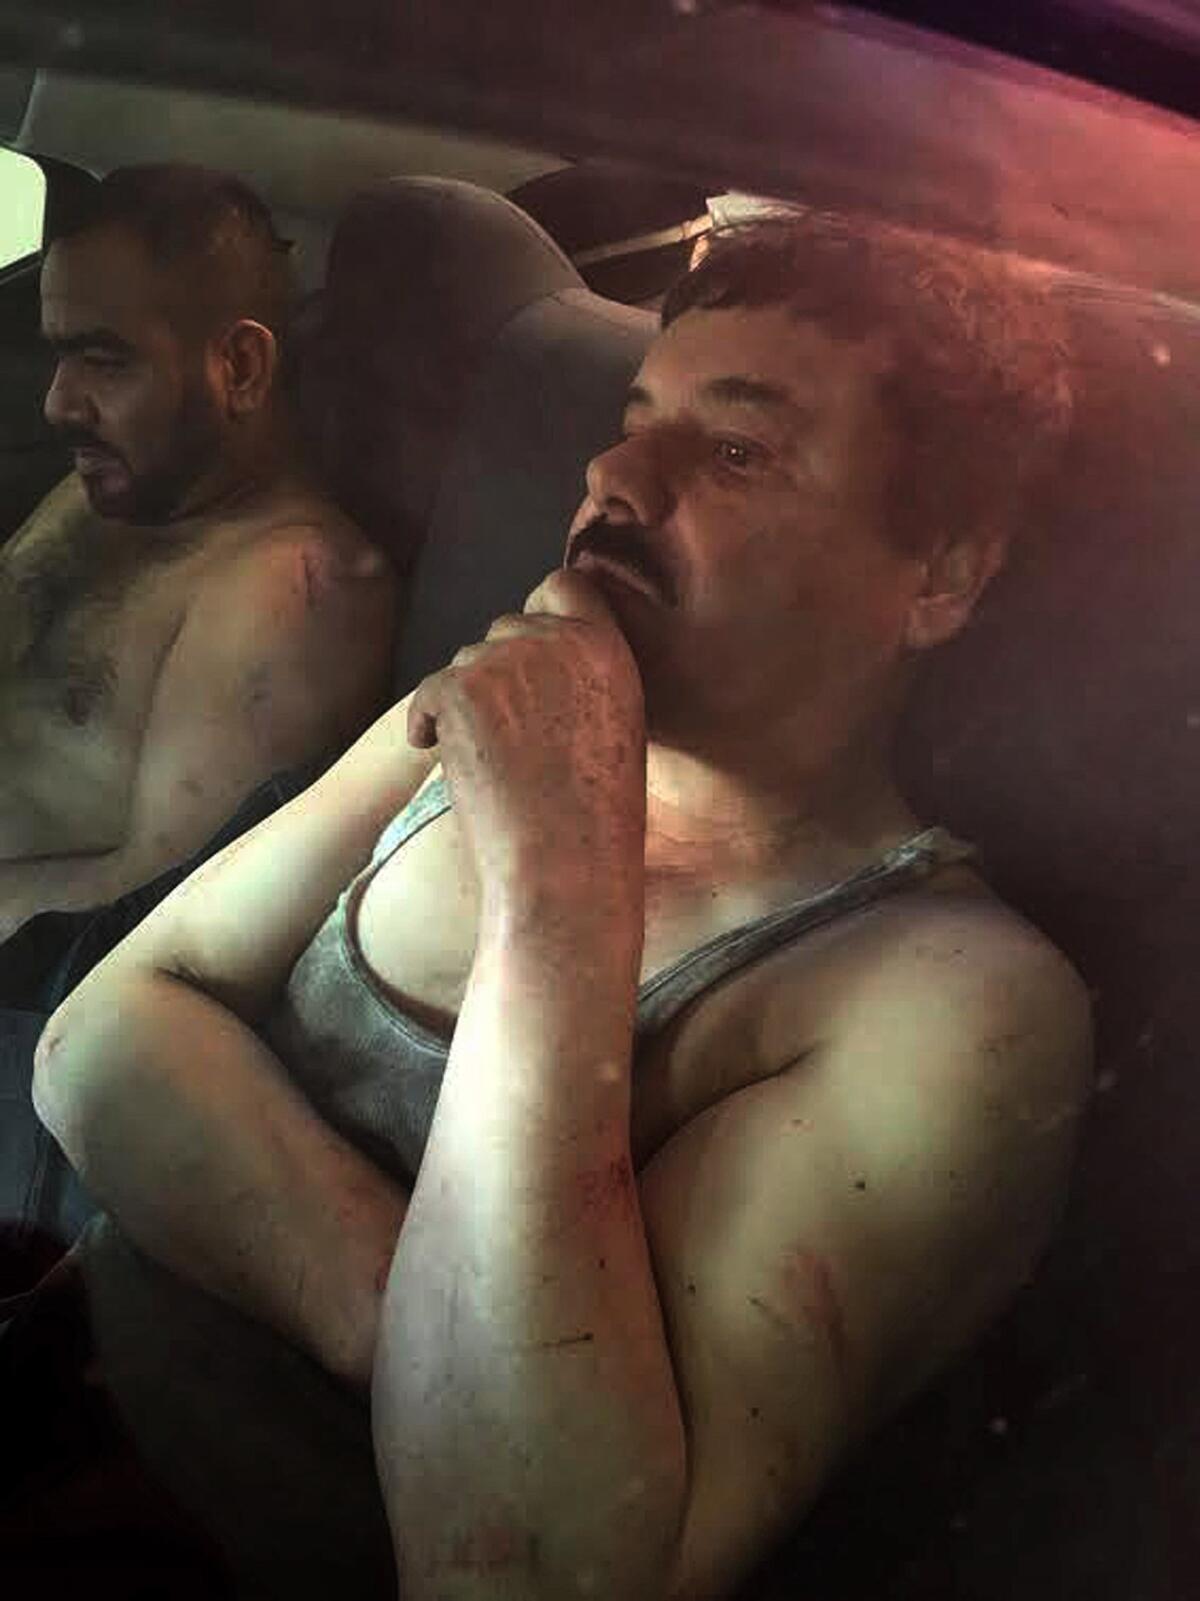 The Mexican website Plaza de Armas published this photograph of Joaquin "El Chapo" Guzman, right, after his capture Jan. 8, 2016.